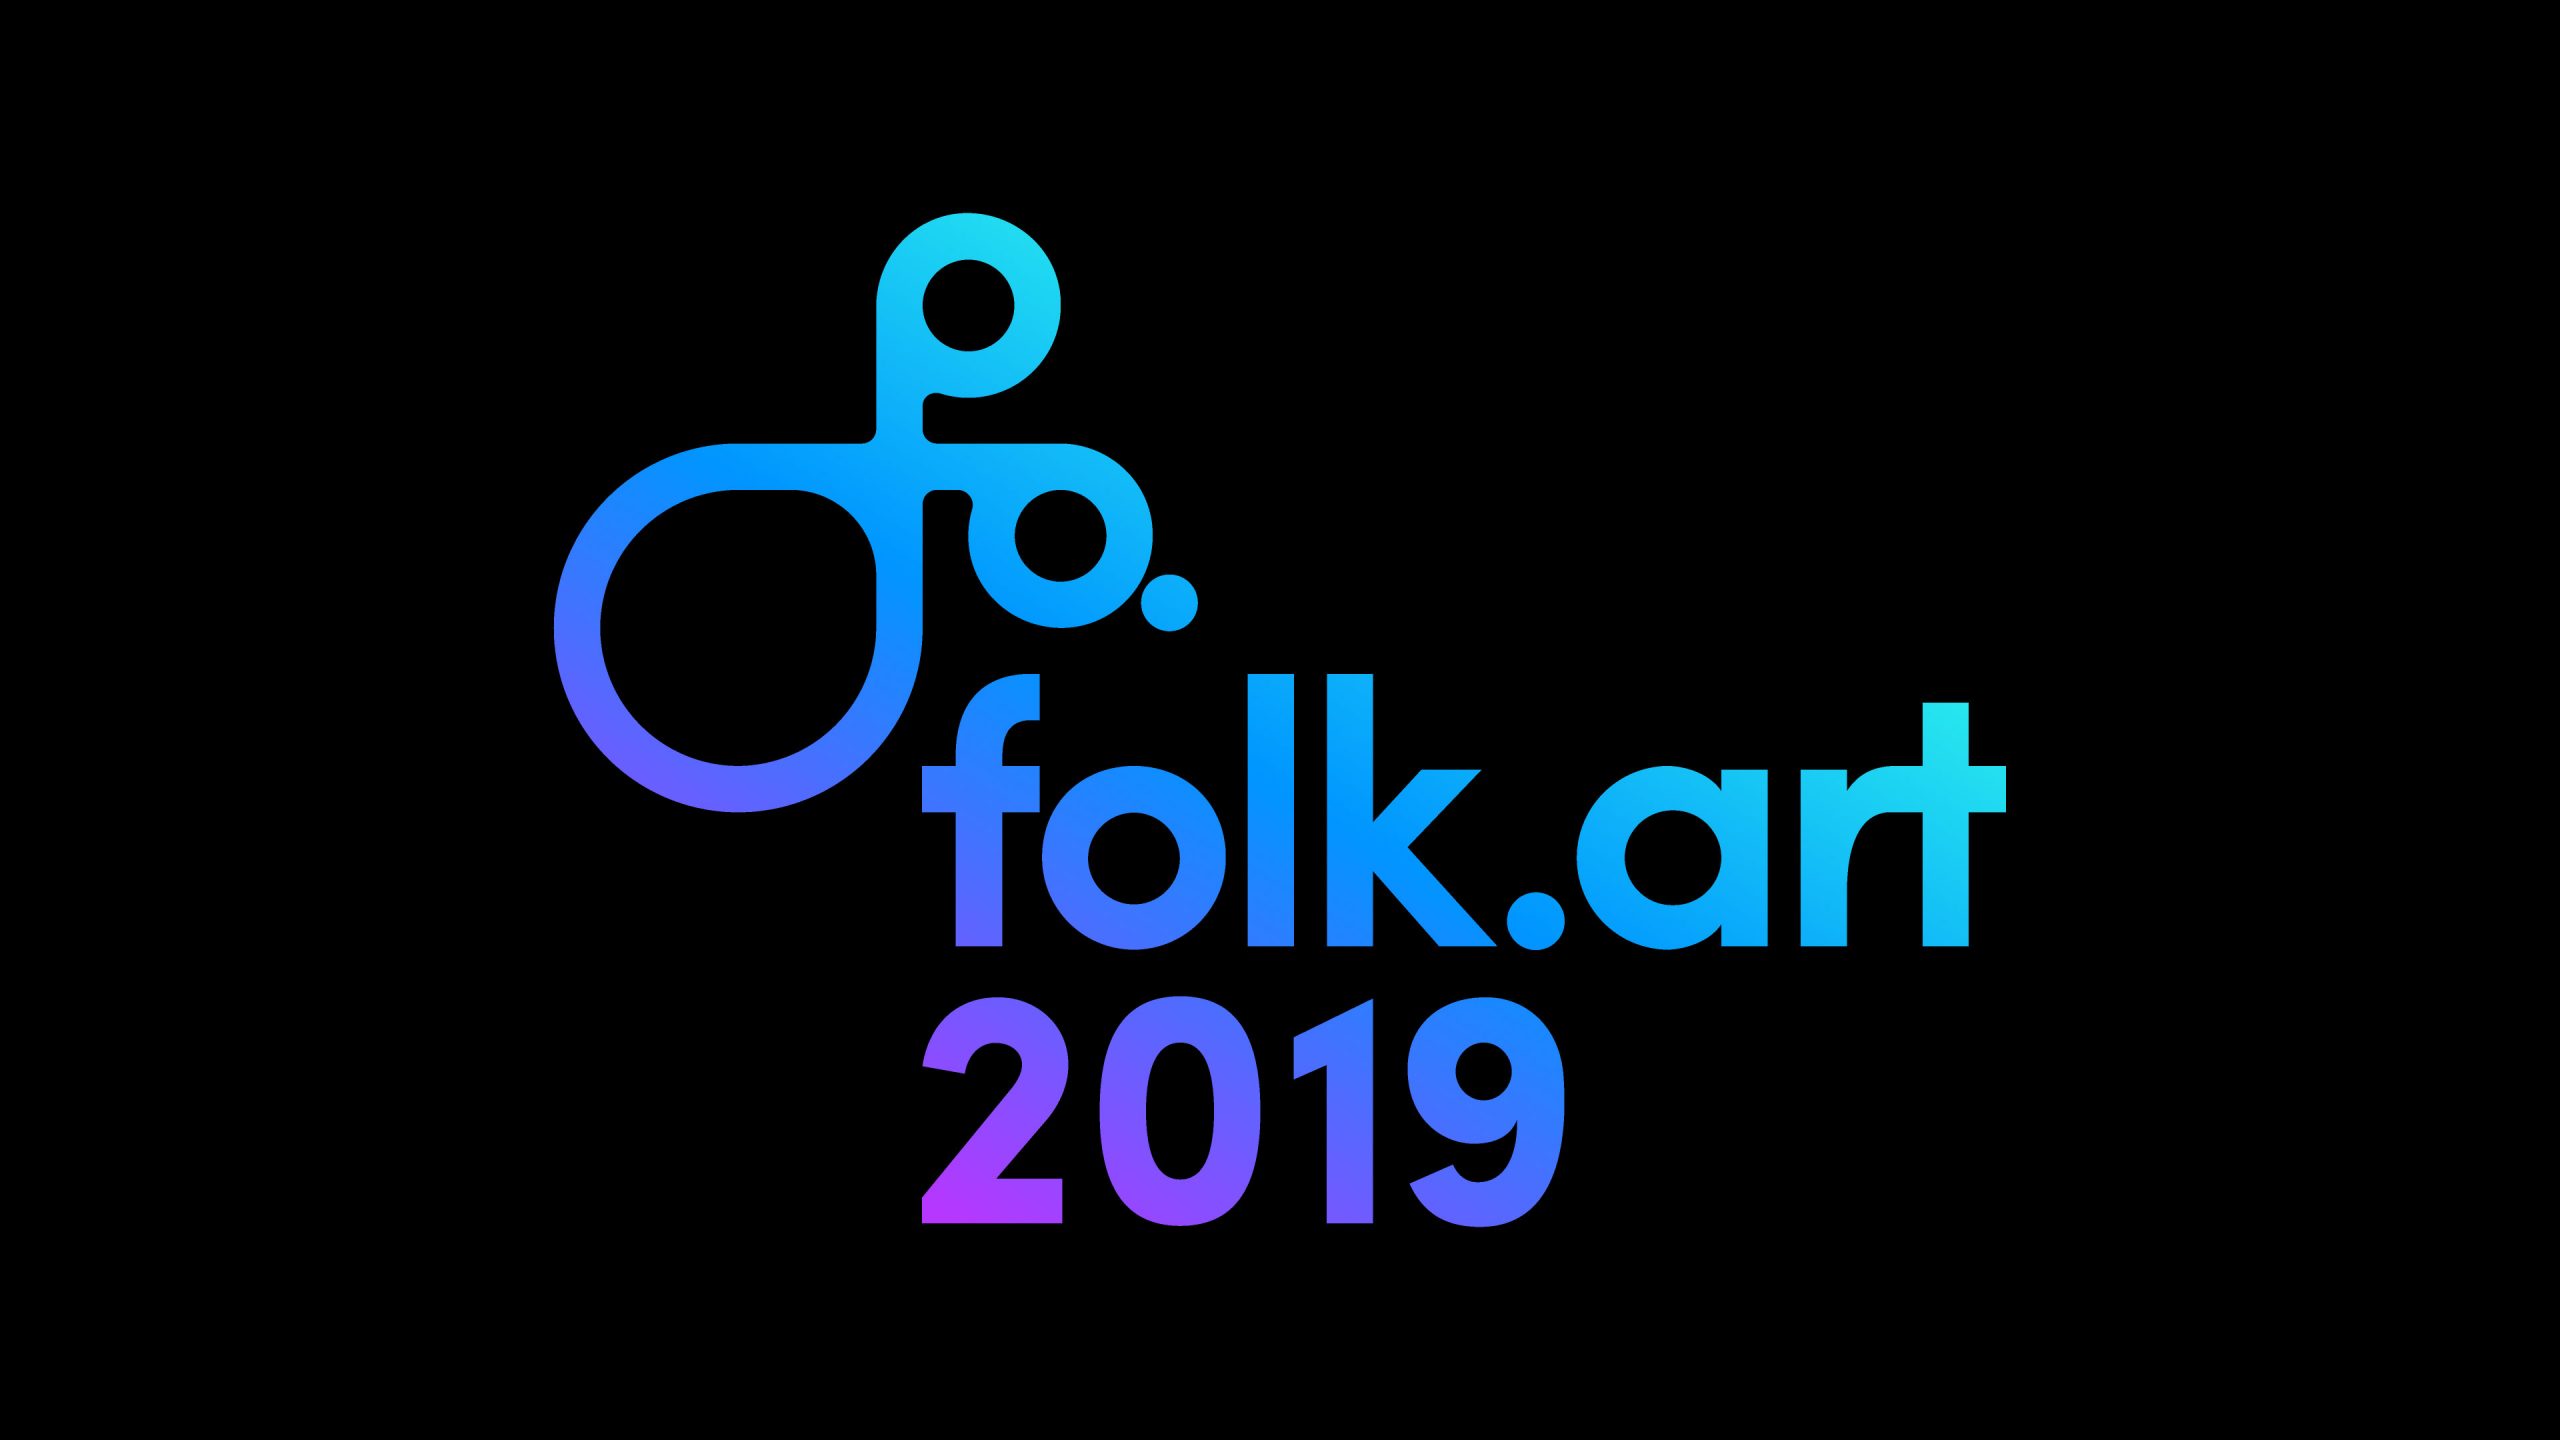 folk.art 2019